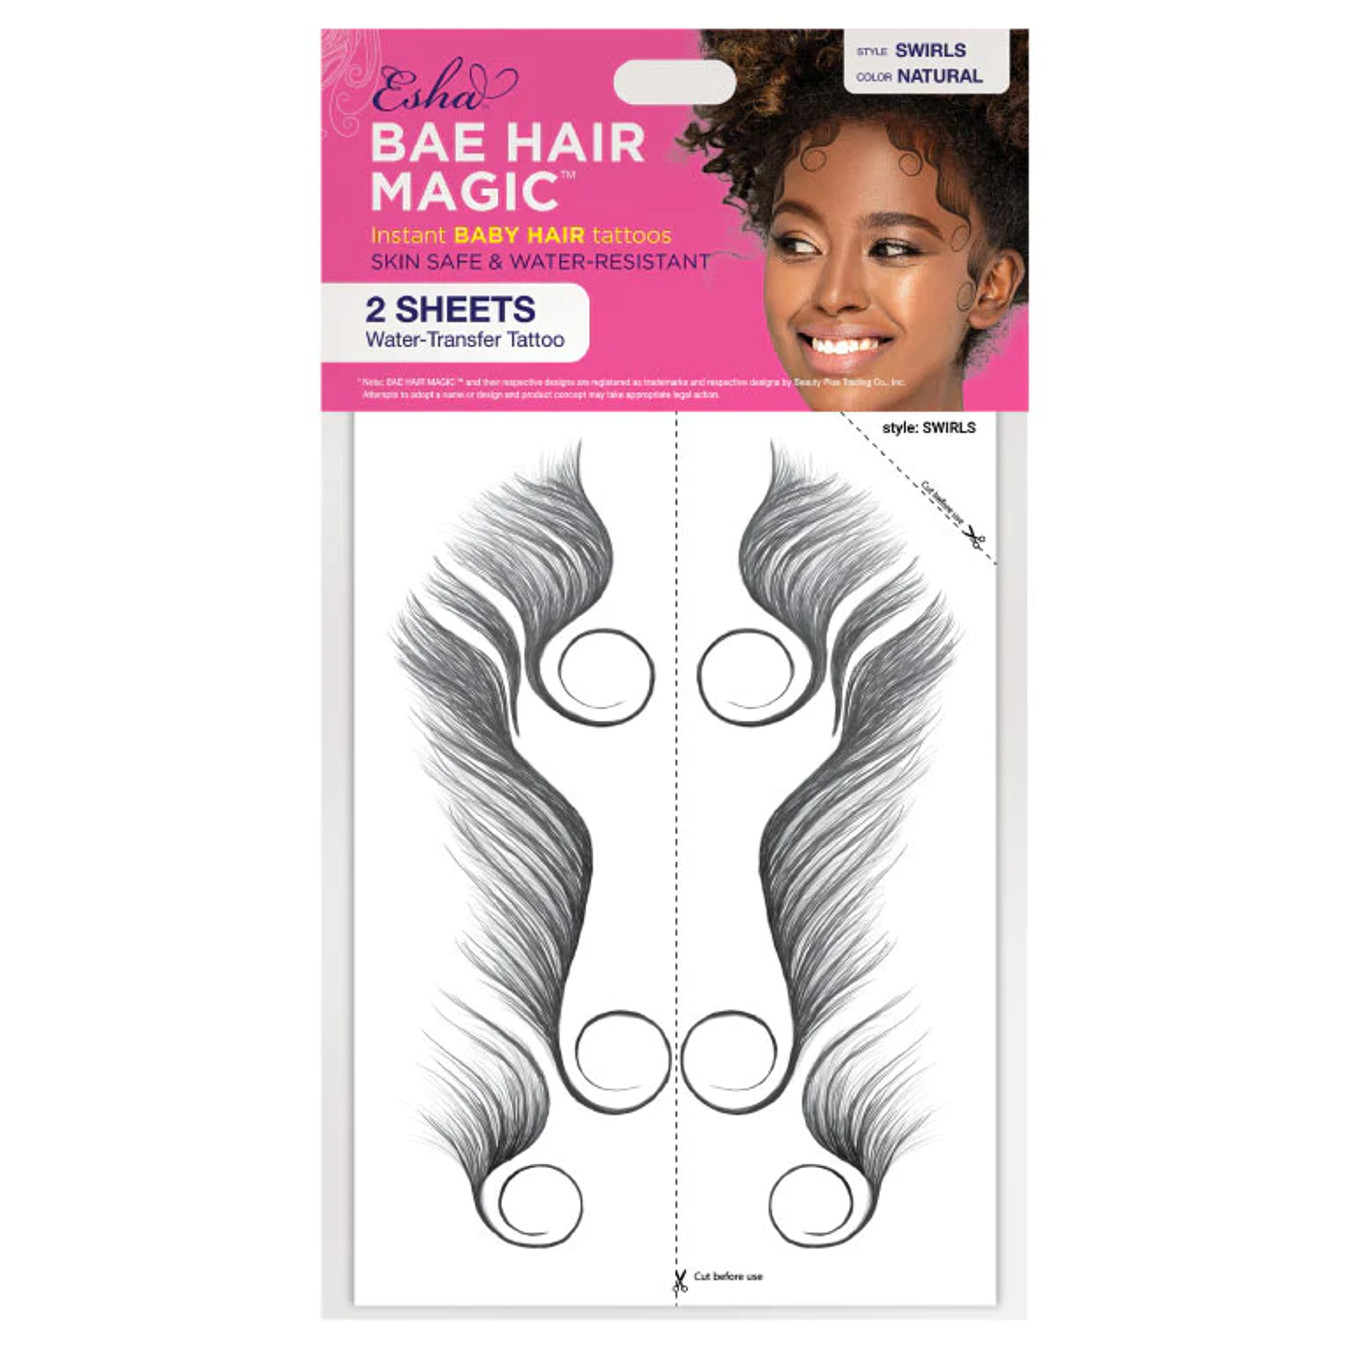 ESHA Bae Hair Magic Instant Tattoo Sticker - Swirls